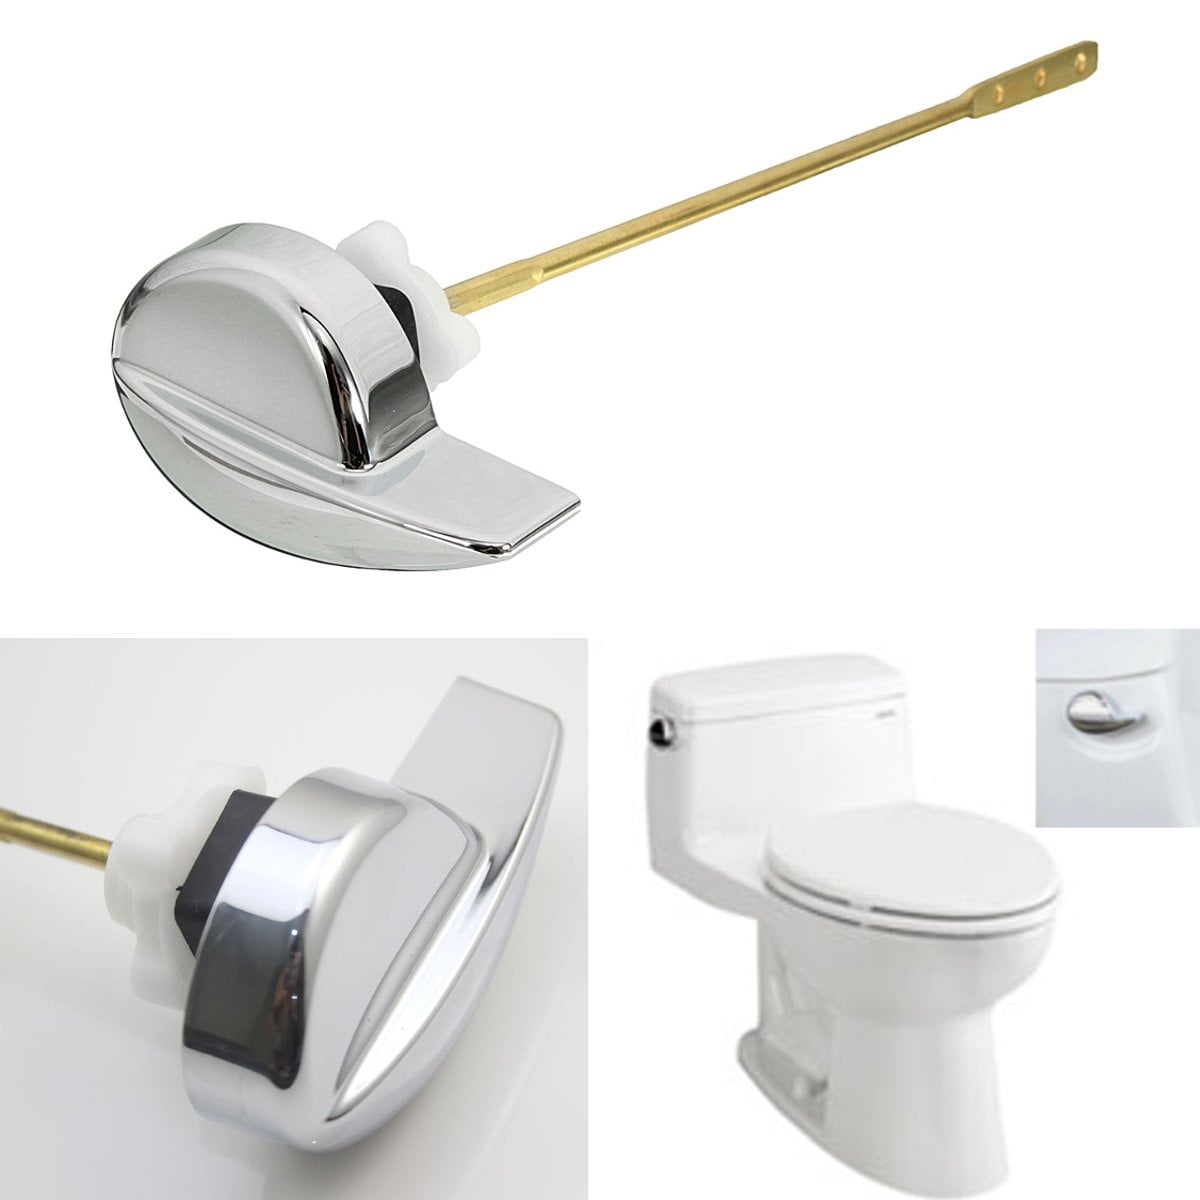 Easy Use Side Mount Toilet Flush Lever Handle Angle Fitting TOTO Kohler Toilet 